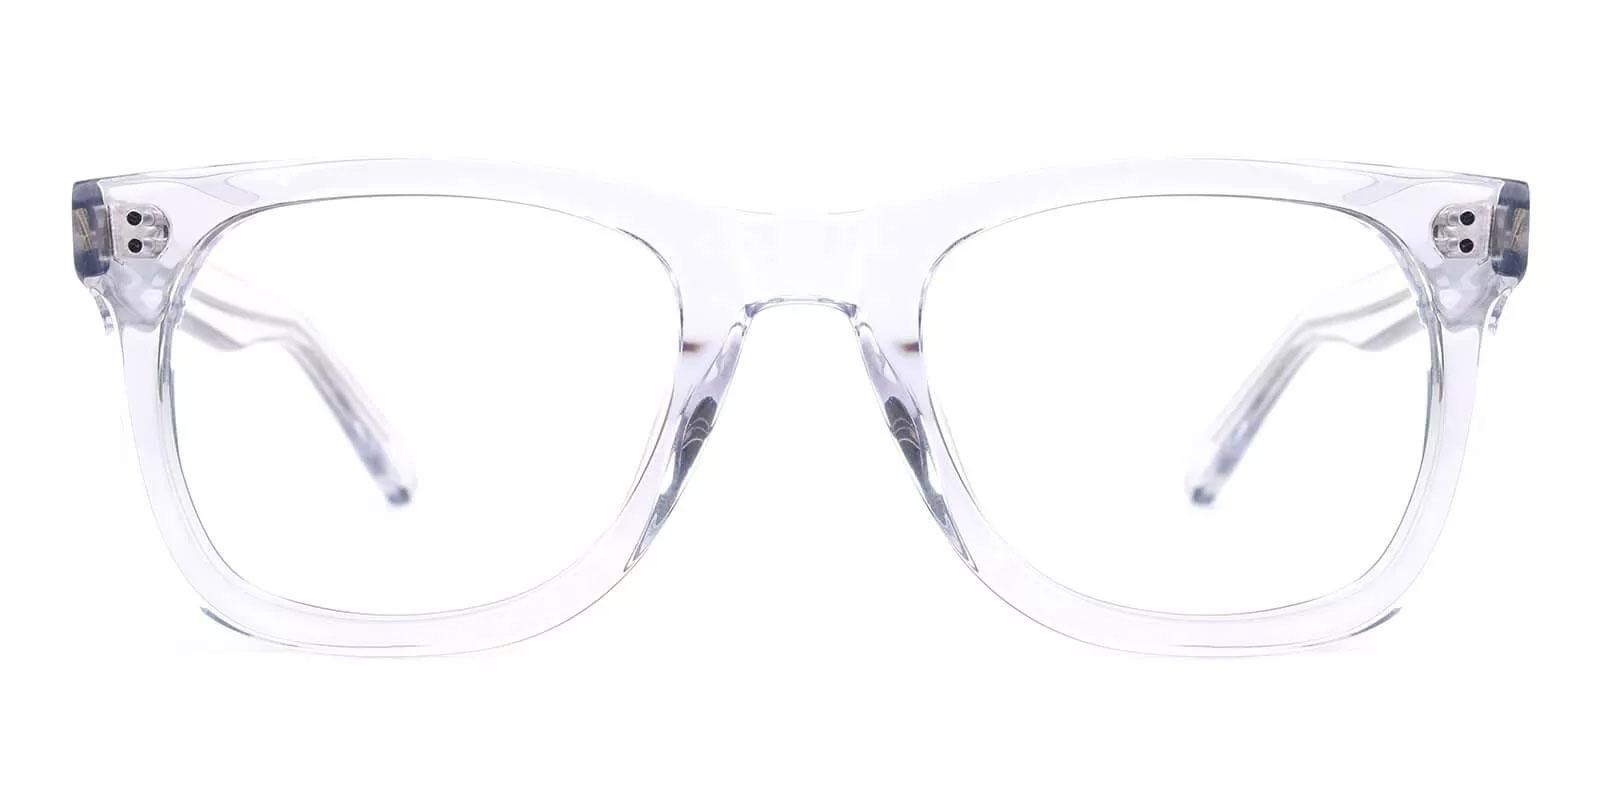 Dean Translucent Acetate Eyeglasses , UniversalBridgeFit Frames from ABBE Glasses